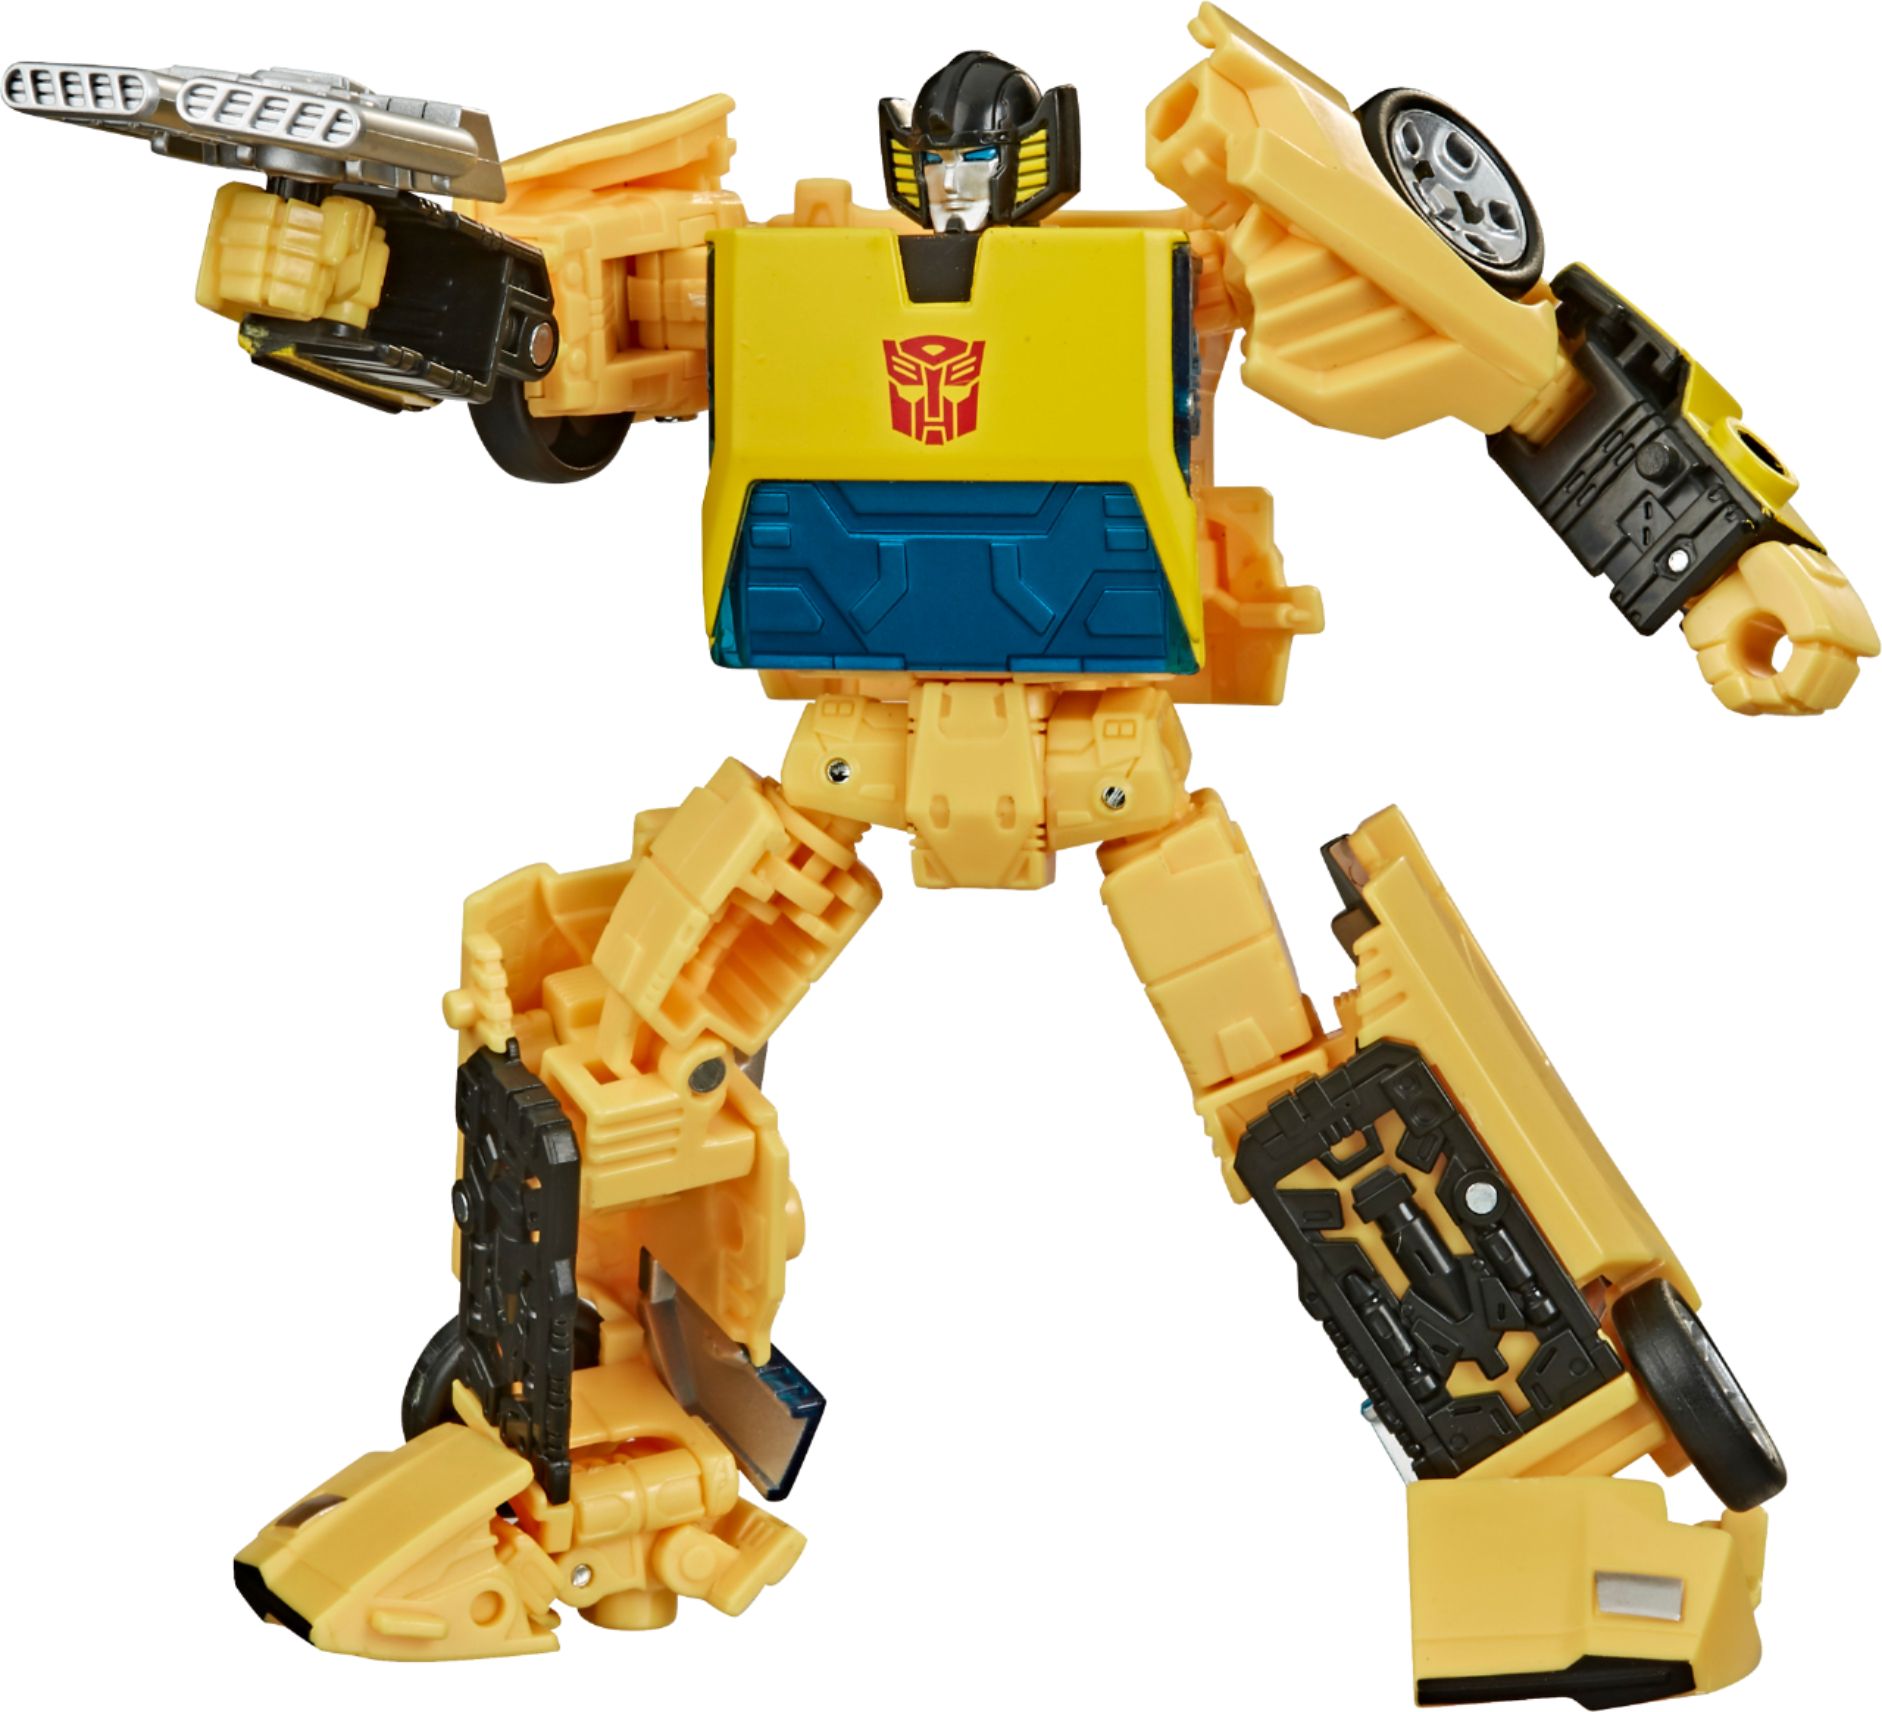 Transformers - Generations War for Cybertron Deluxe WFC-E36 Sunstreaker